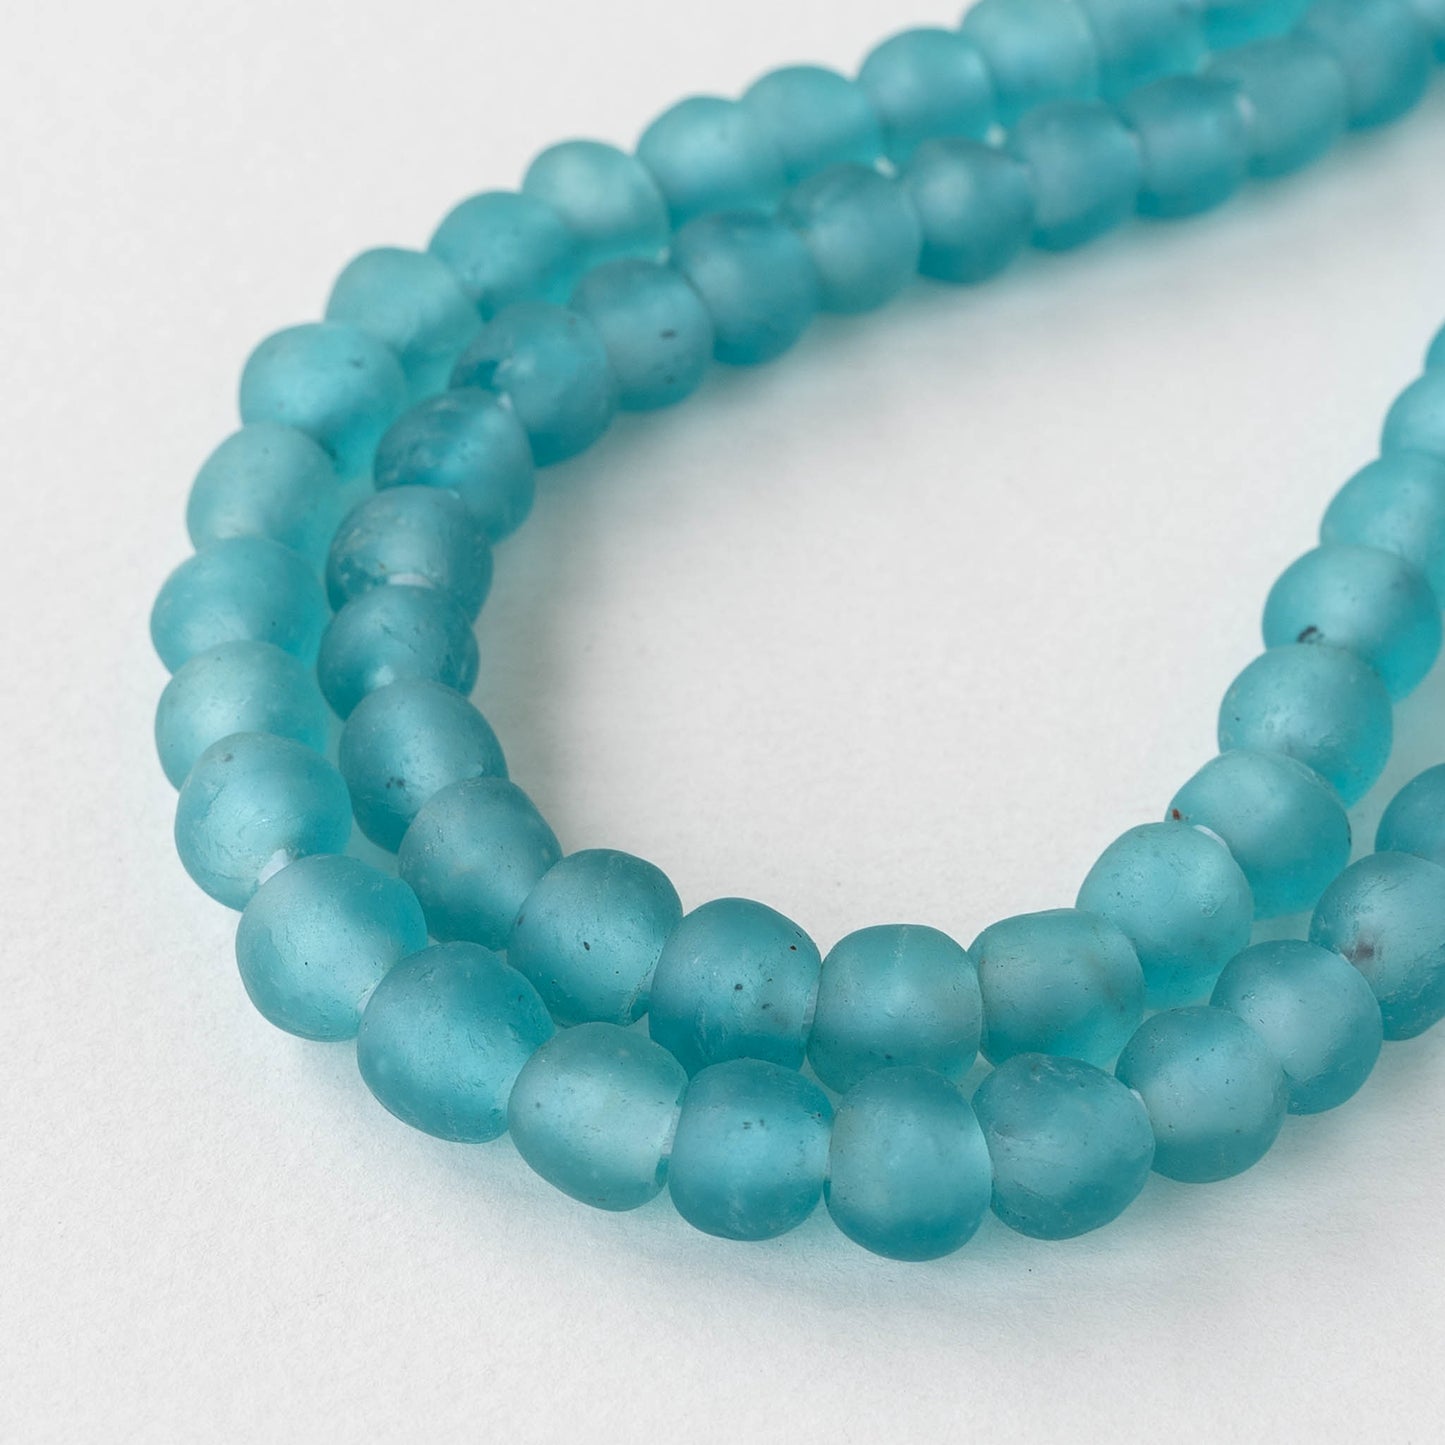 Round Glass Beads - 10-11mm - Aqua Blue - 10 Inches